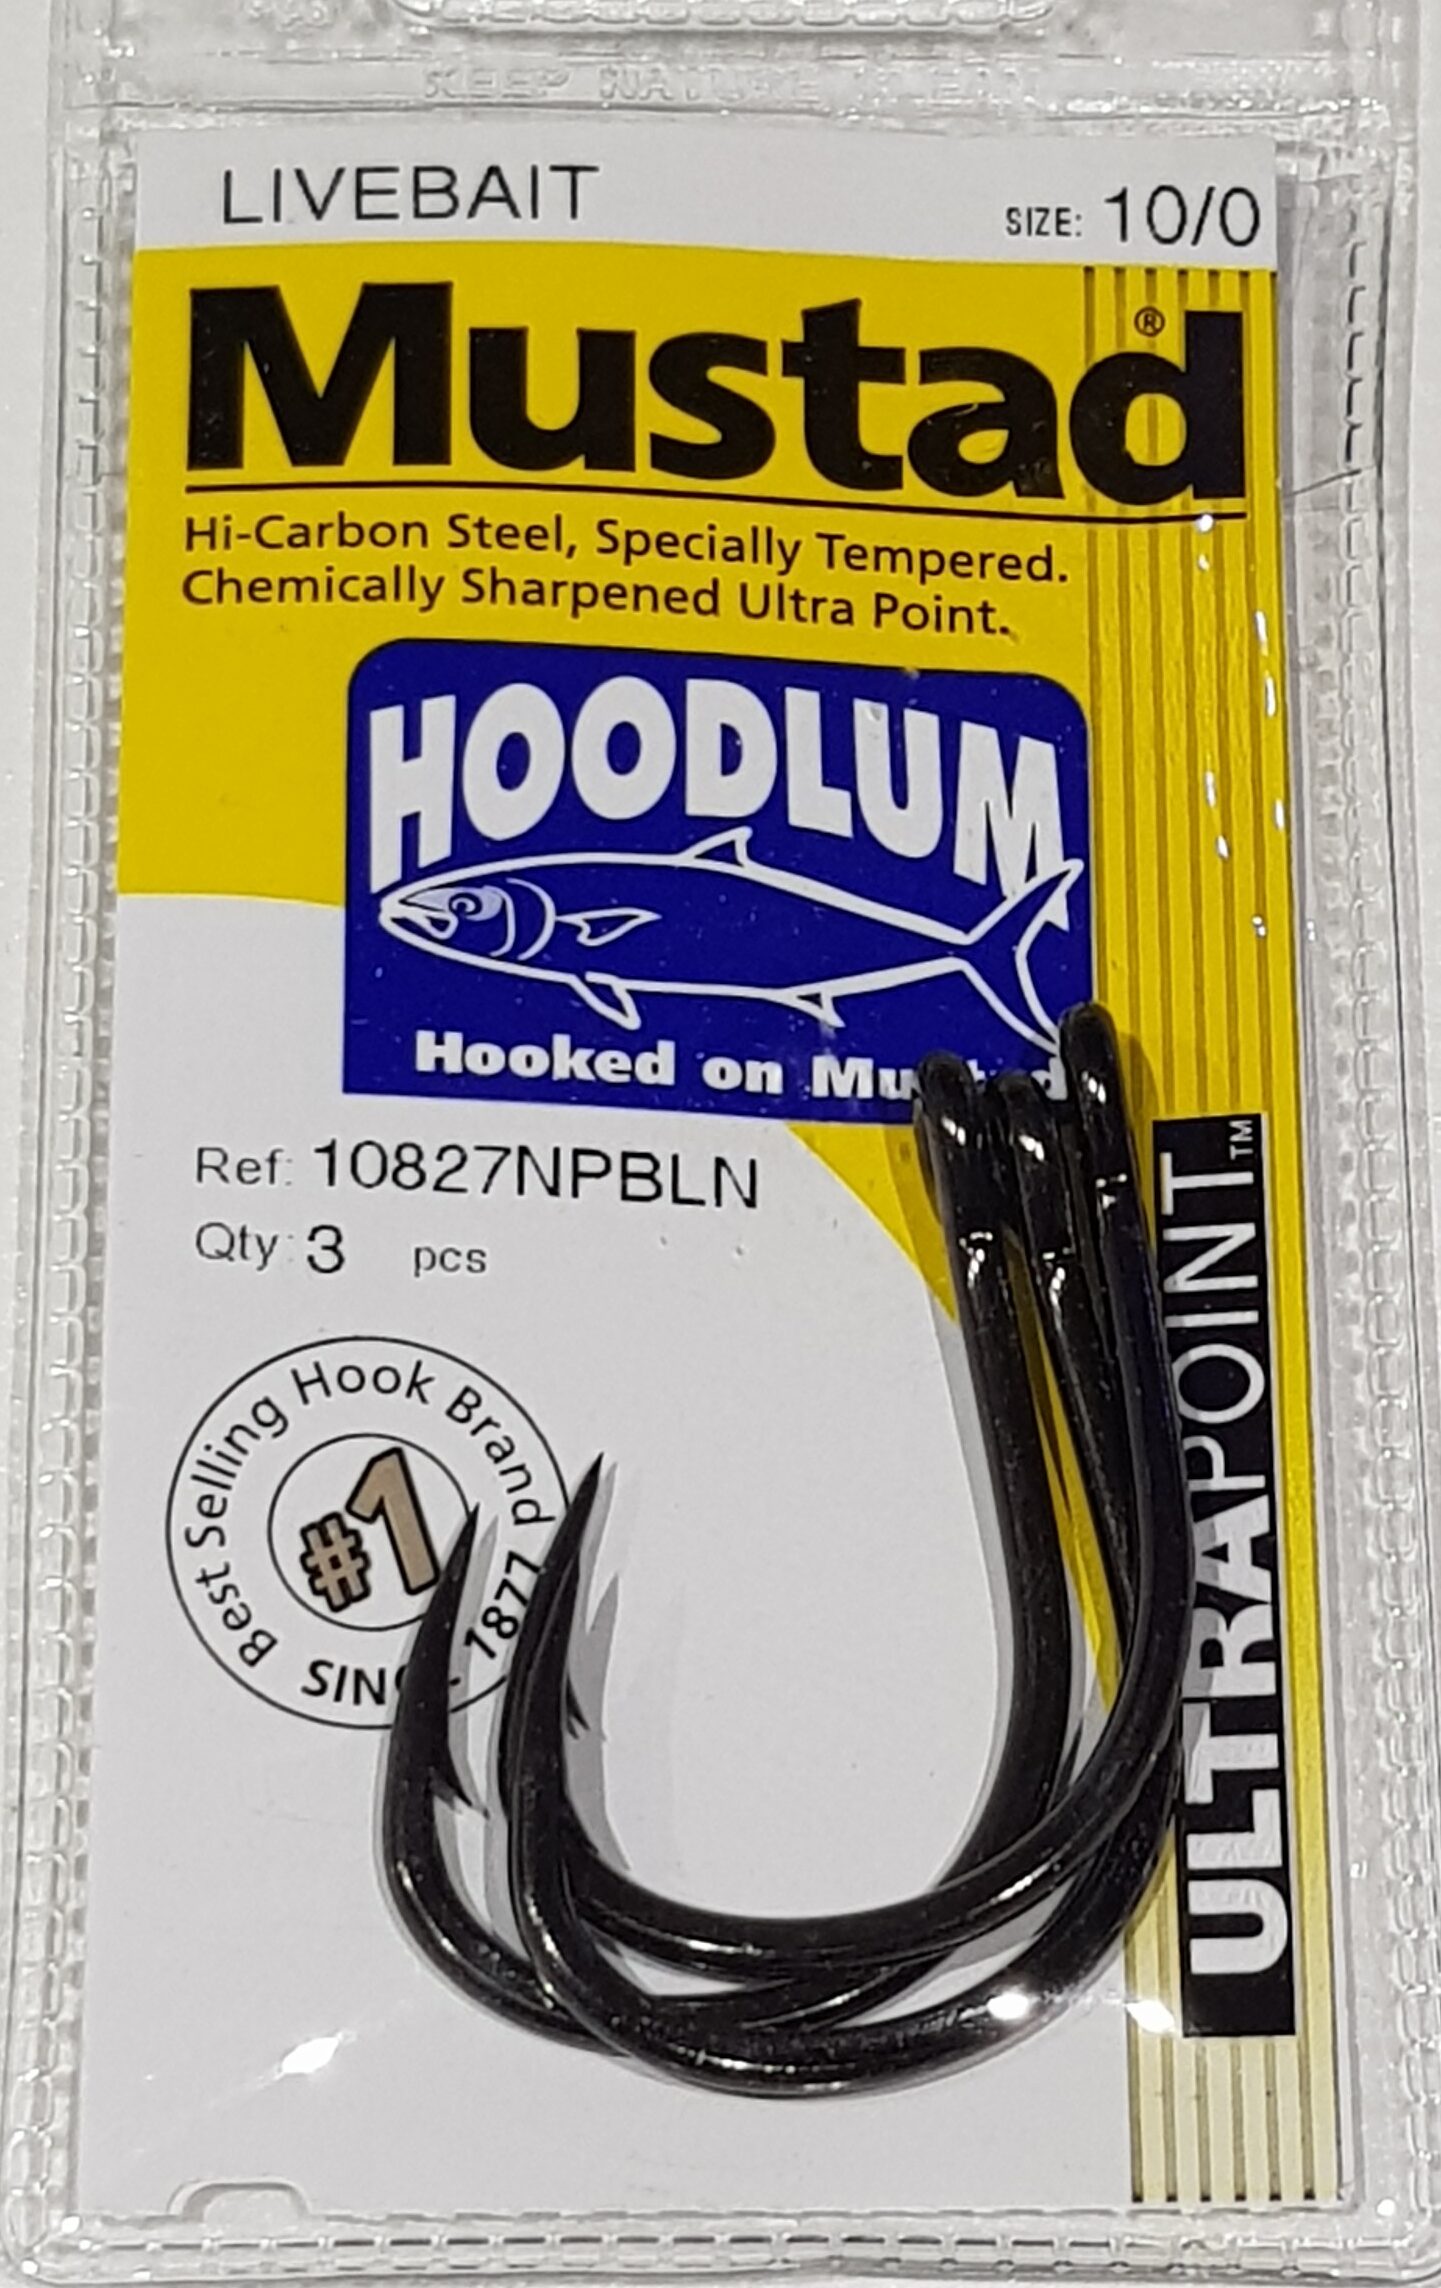 Mustad Hoodlum Live Bait Fishing Hooks 10/0 – Online Fishen Supplies